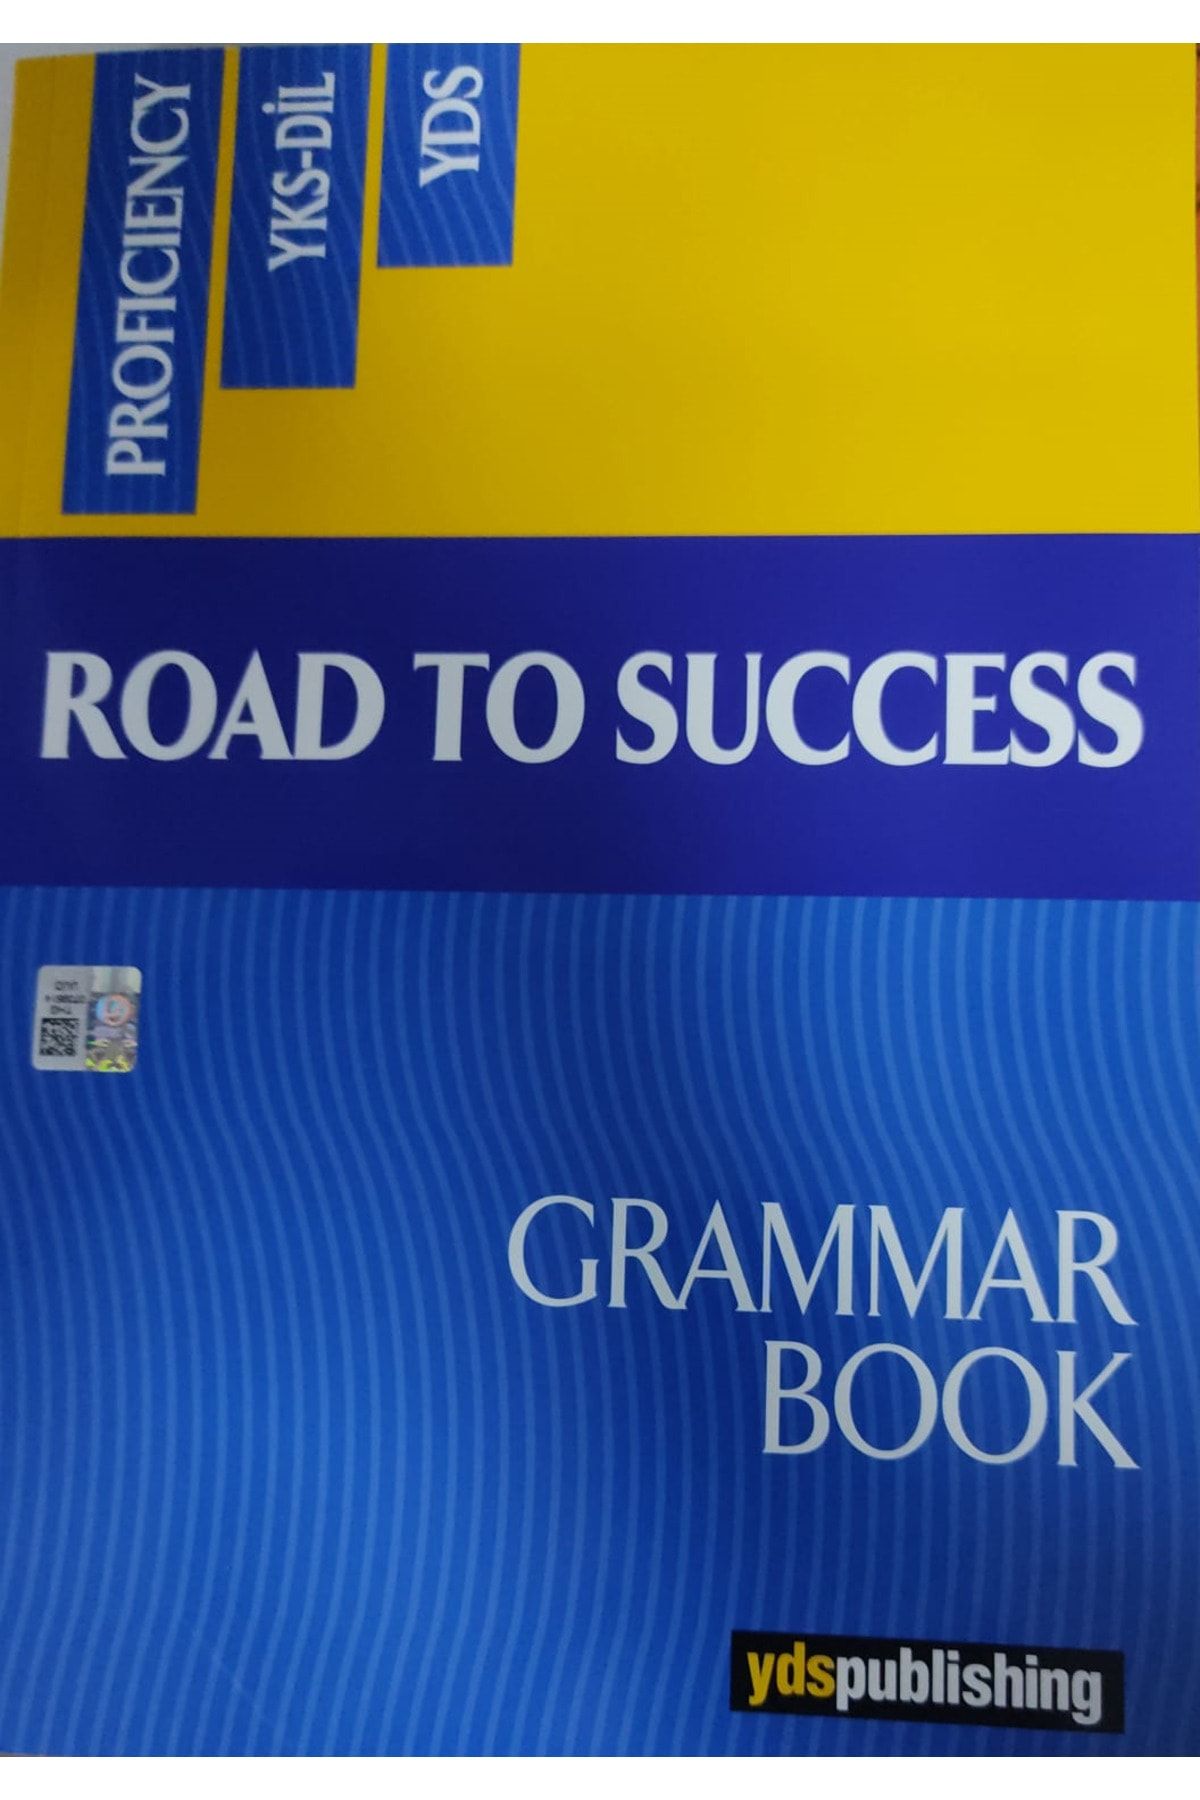 Ydspublishing Yayınları Road To Success Grammar Book – Ydt Yds Yökdil Hazırlık